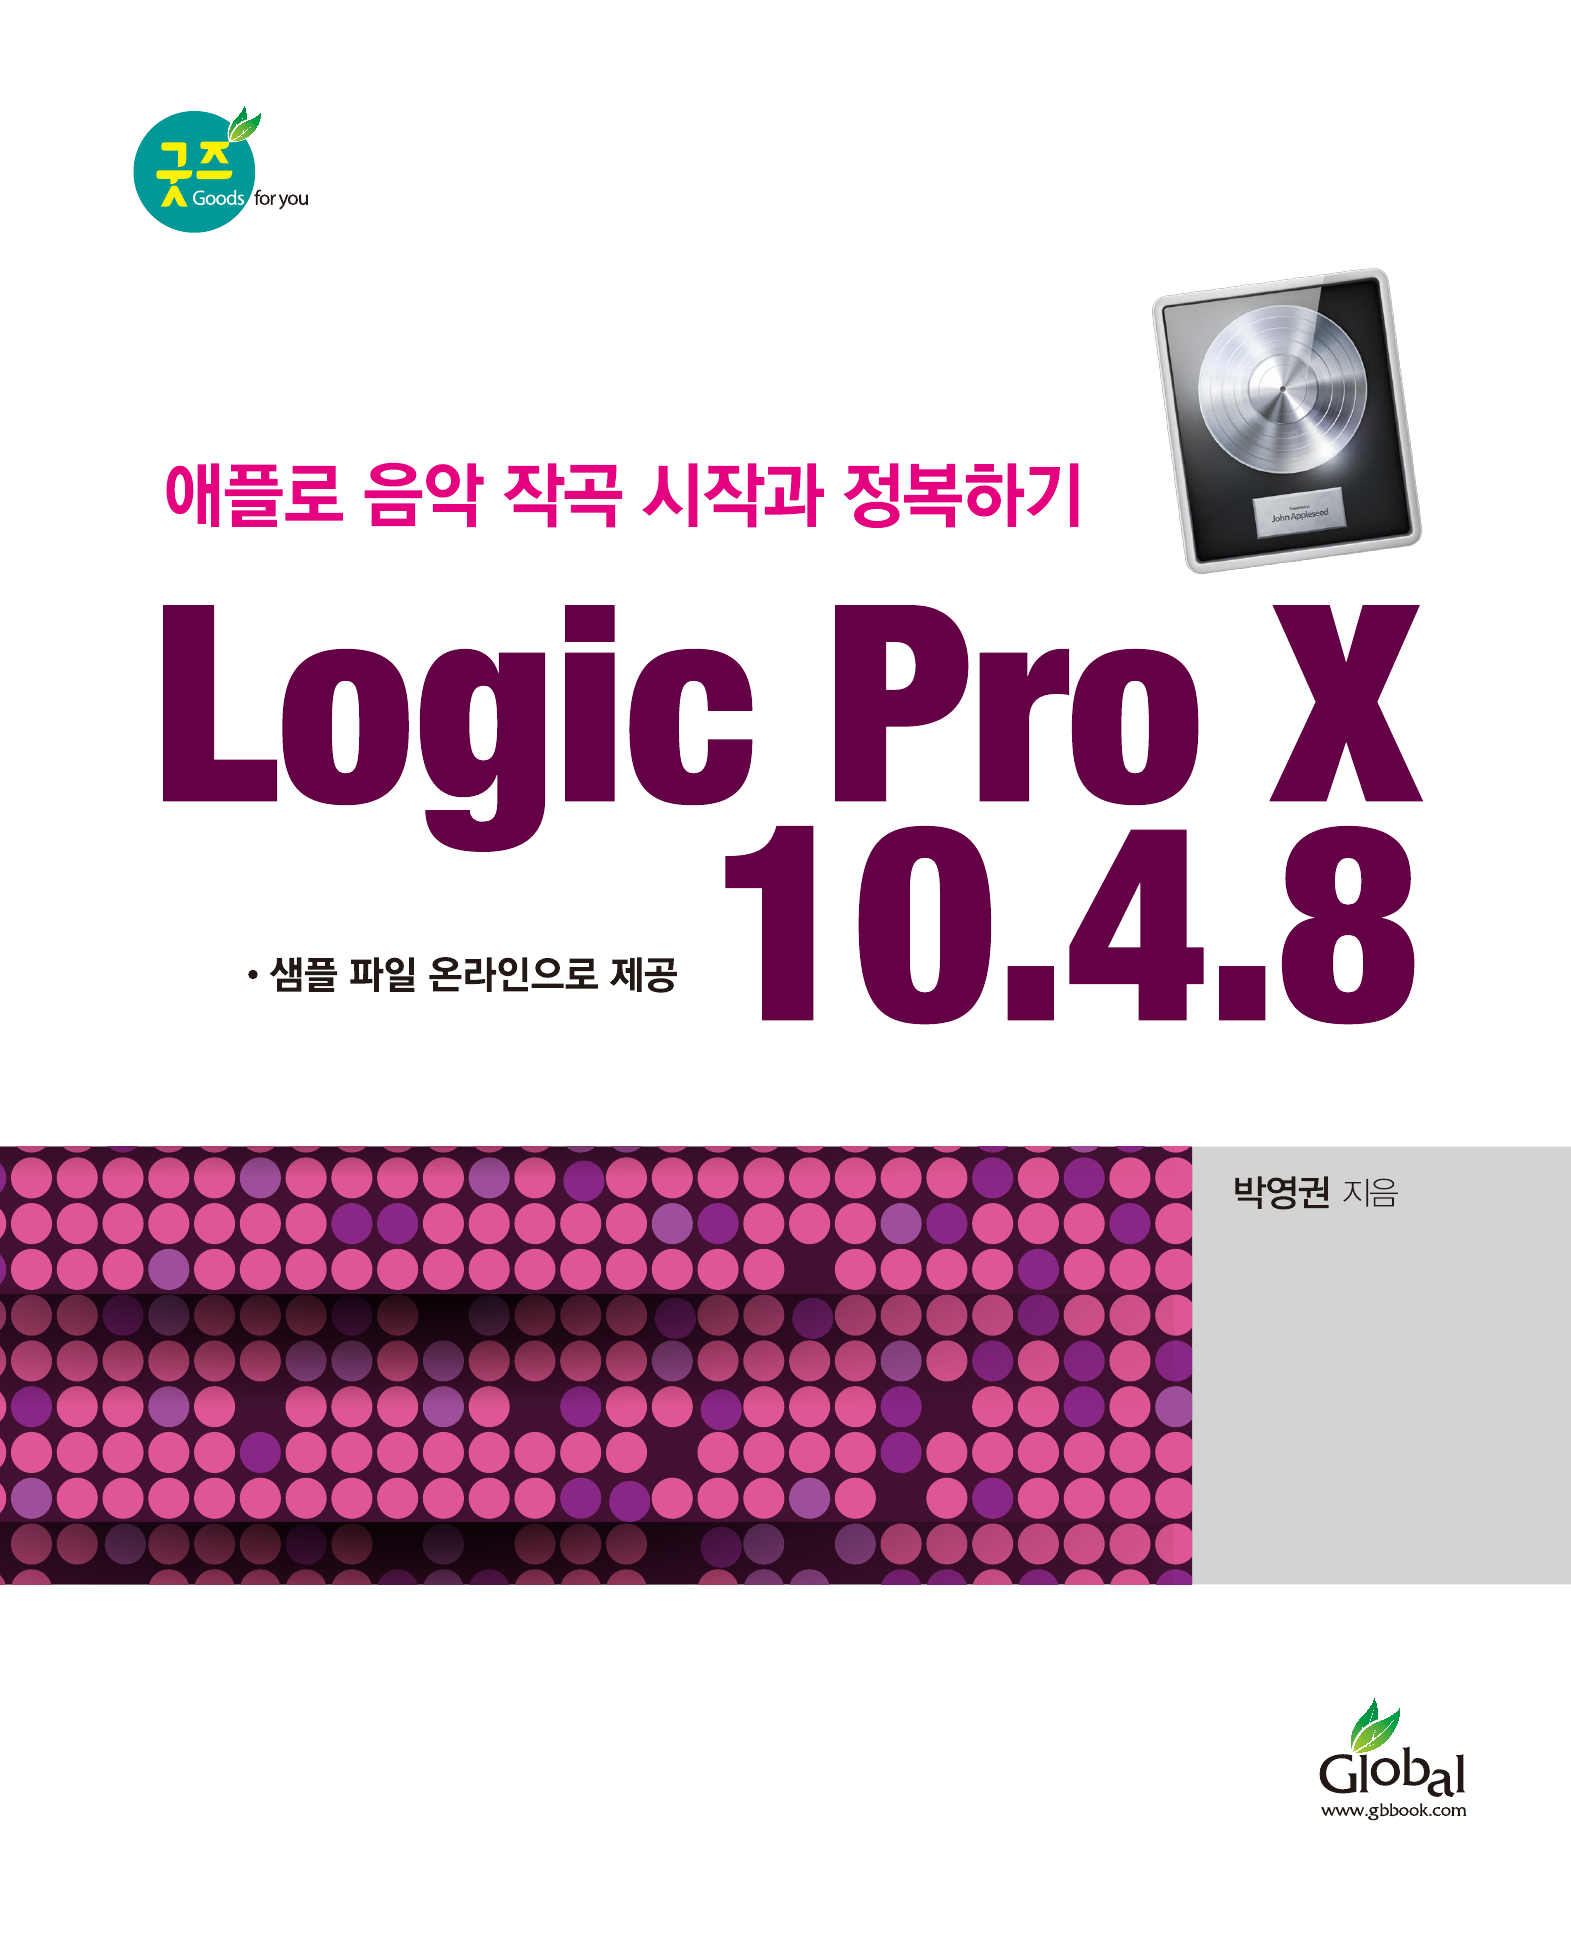 logic Pro X 10.4.8